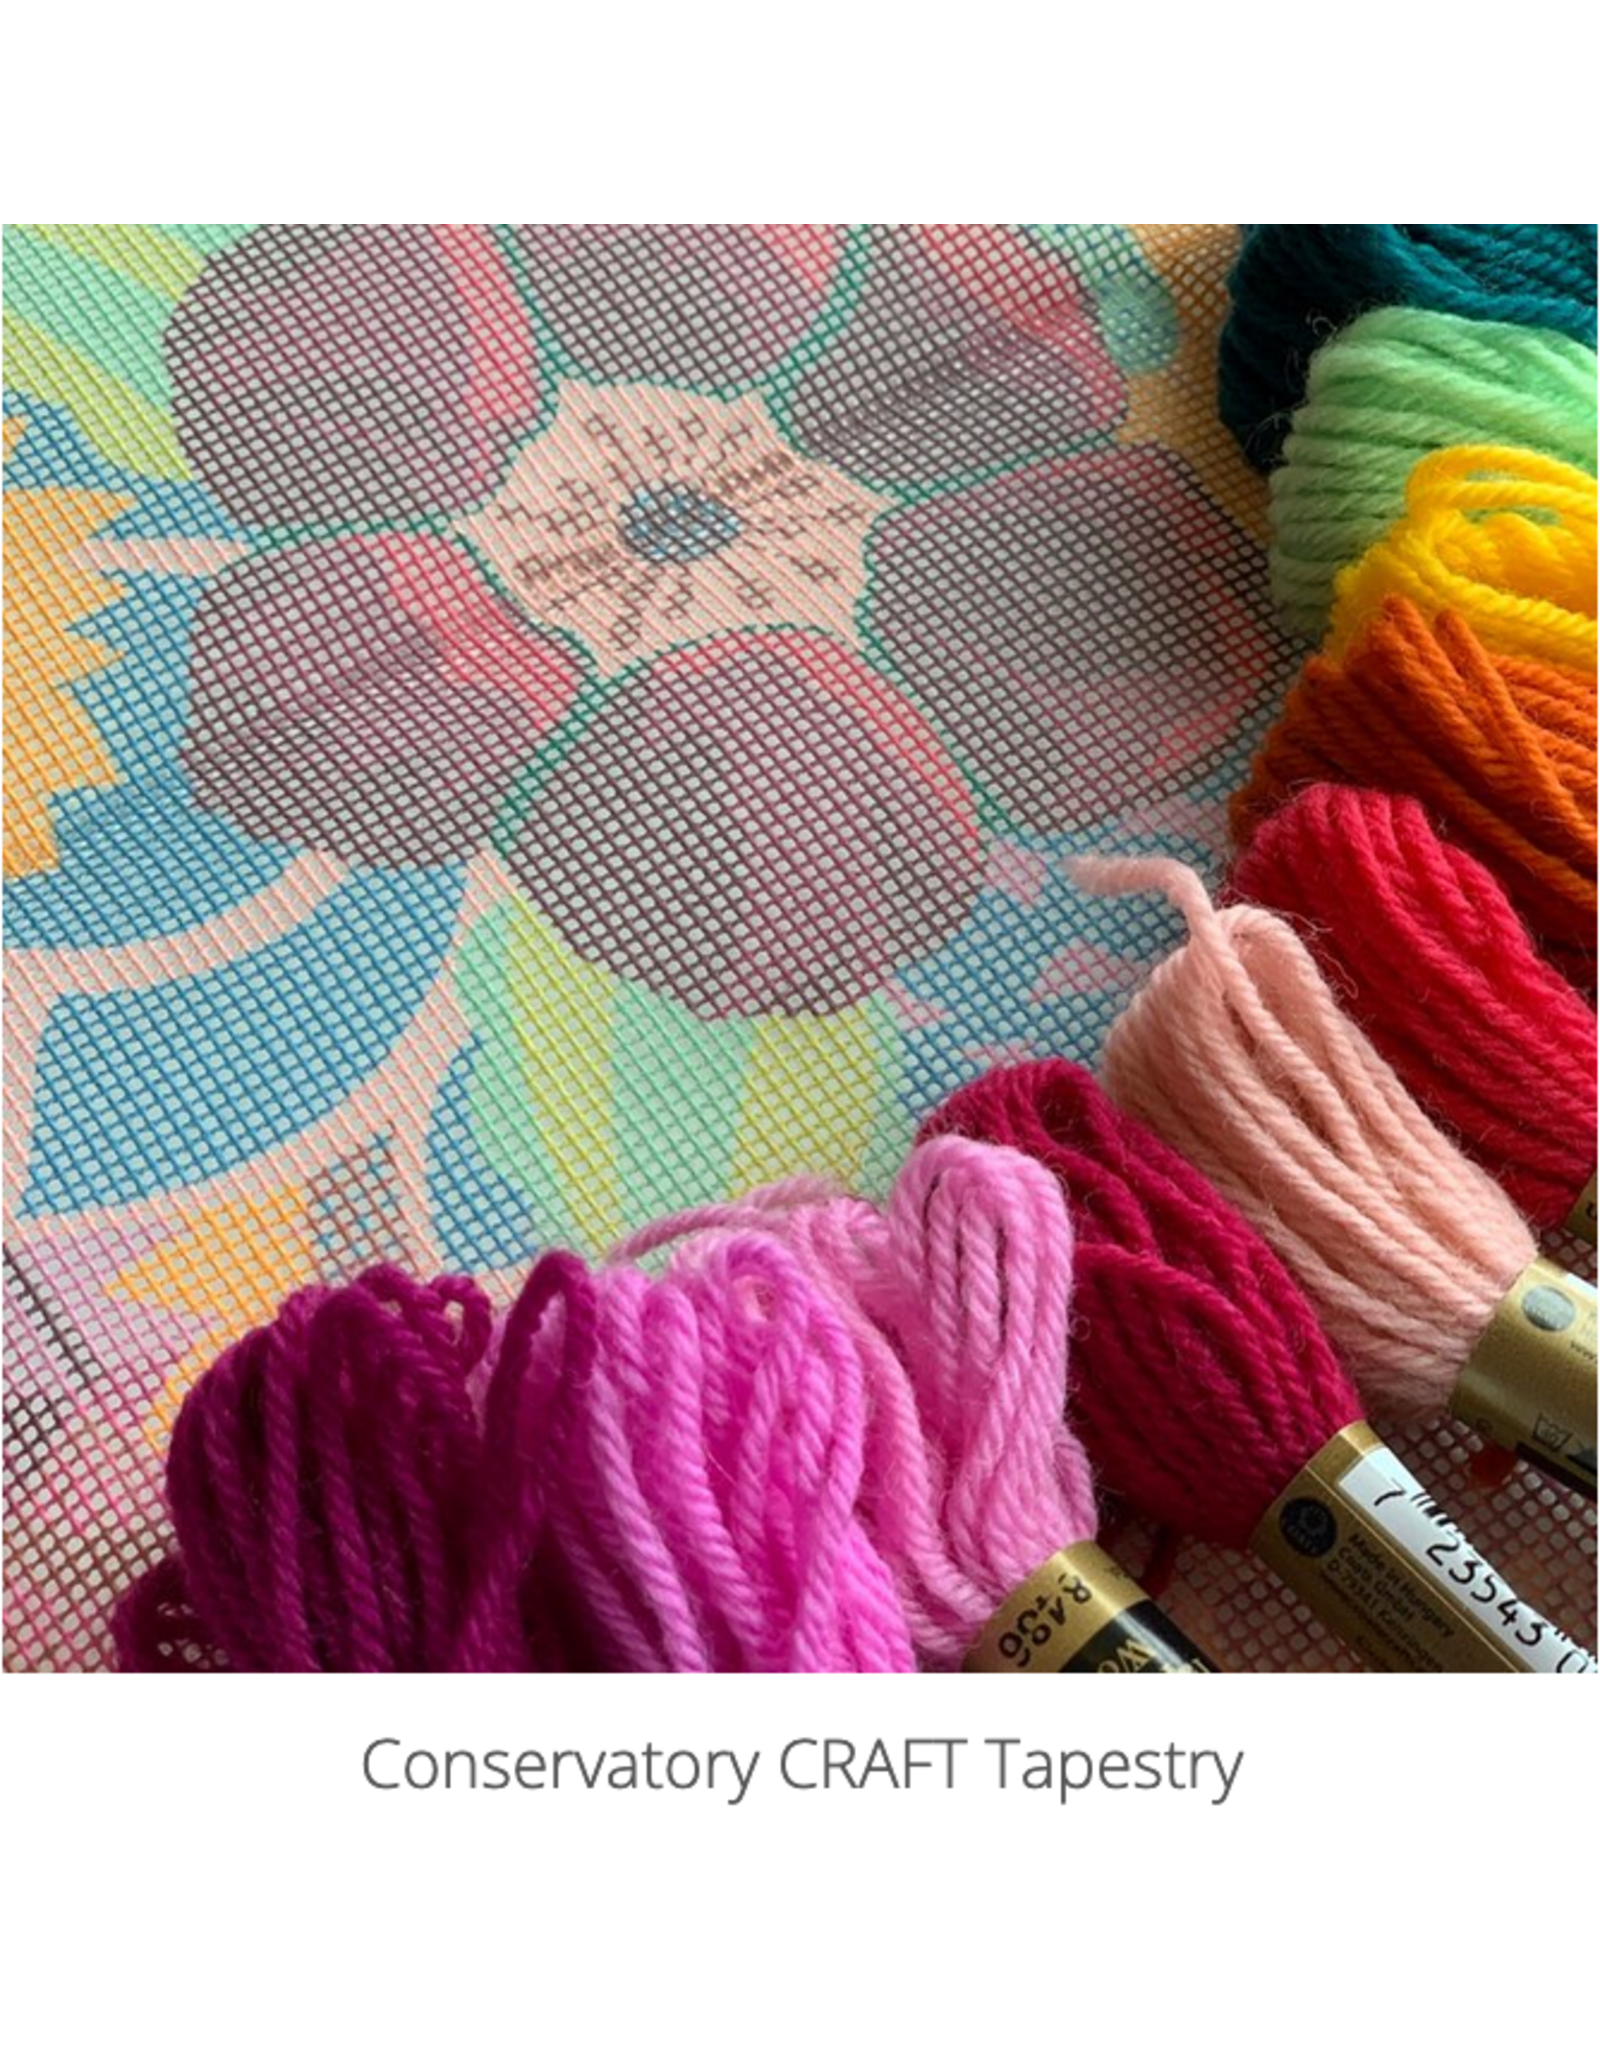 Conservatory Craft Garden Gift, Tapestry Needlepoint Kit